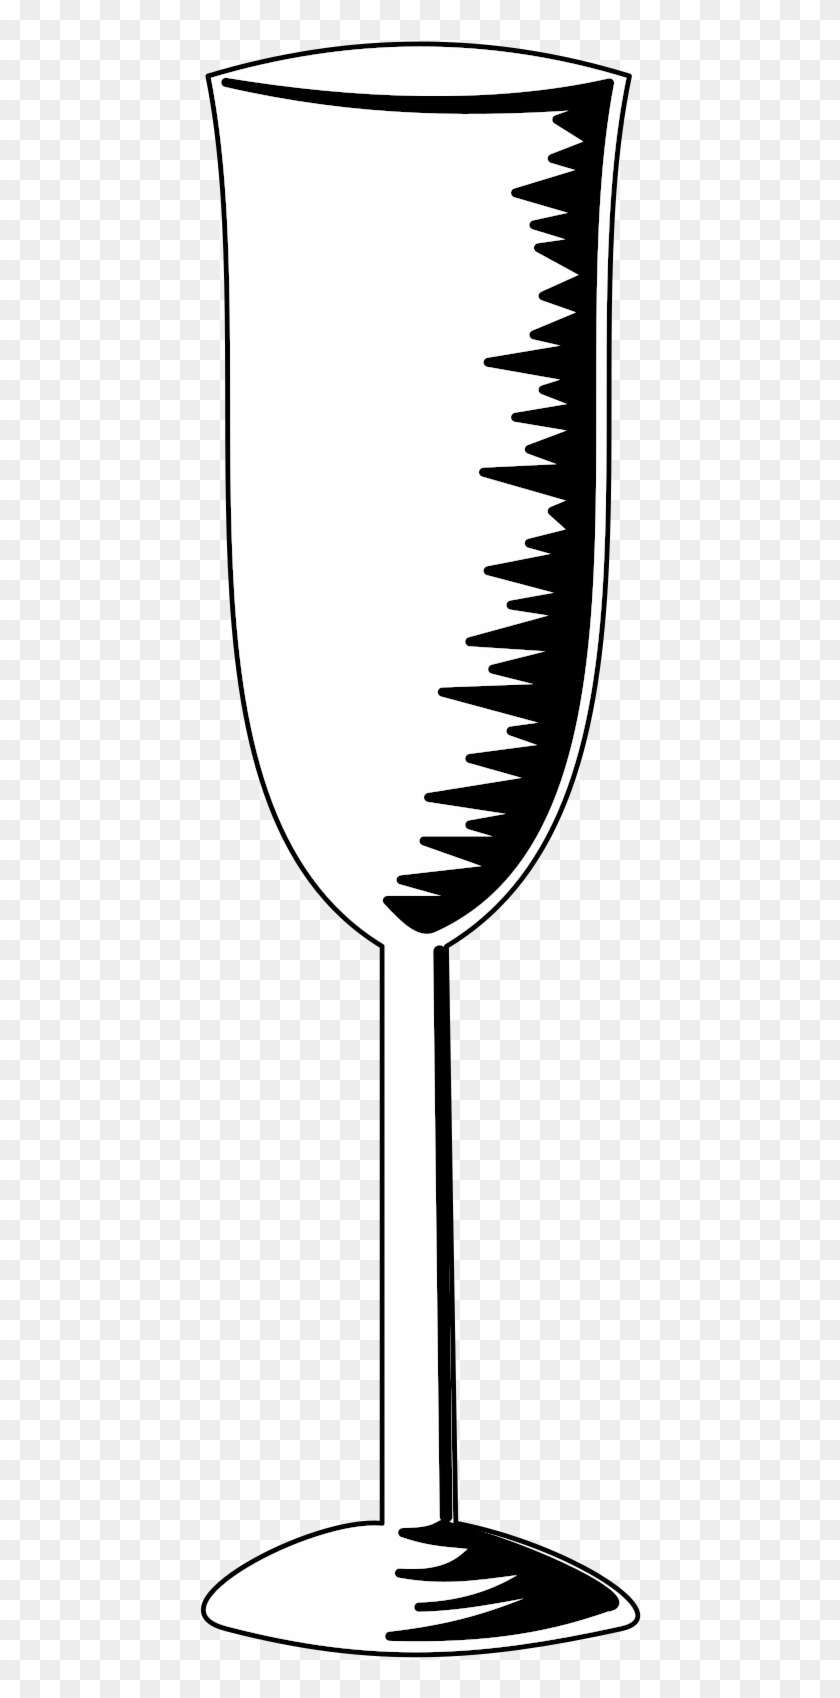 Big Image - Champagne Flute Glass Sketch Clipart #1734013